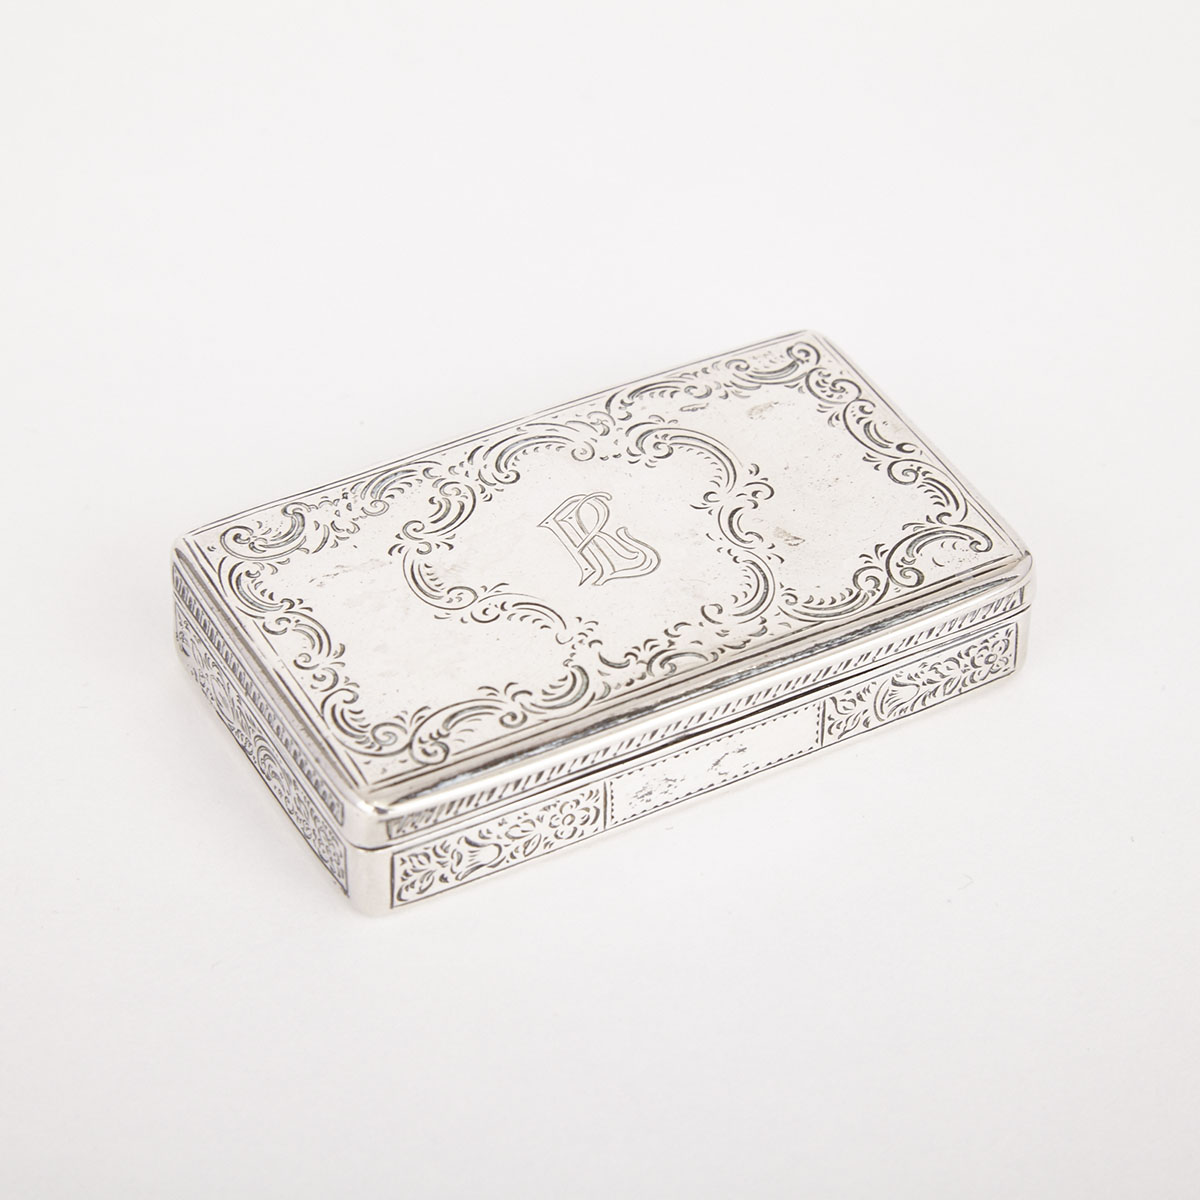 Austro-Hungarian Silver Rectangular Snuff Box, 1857